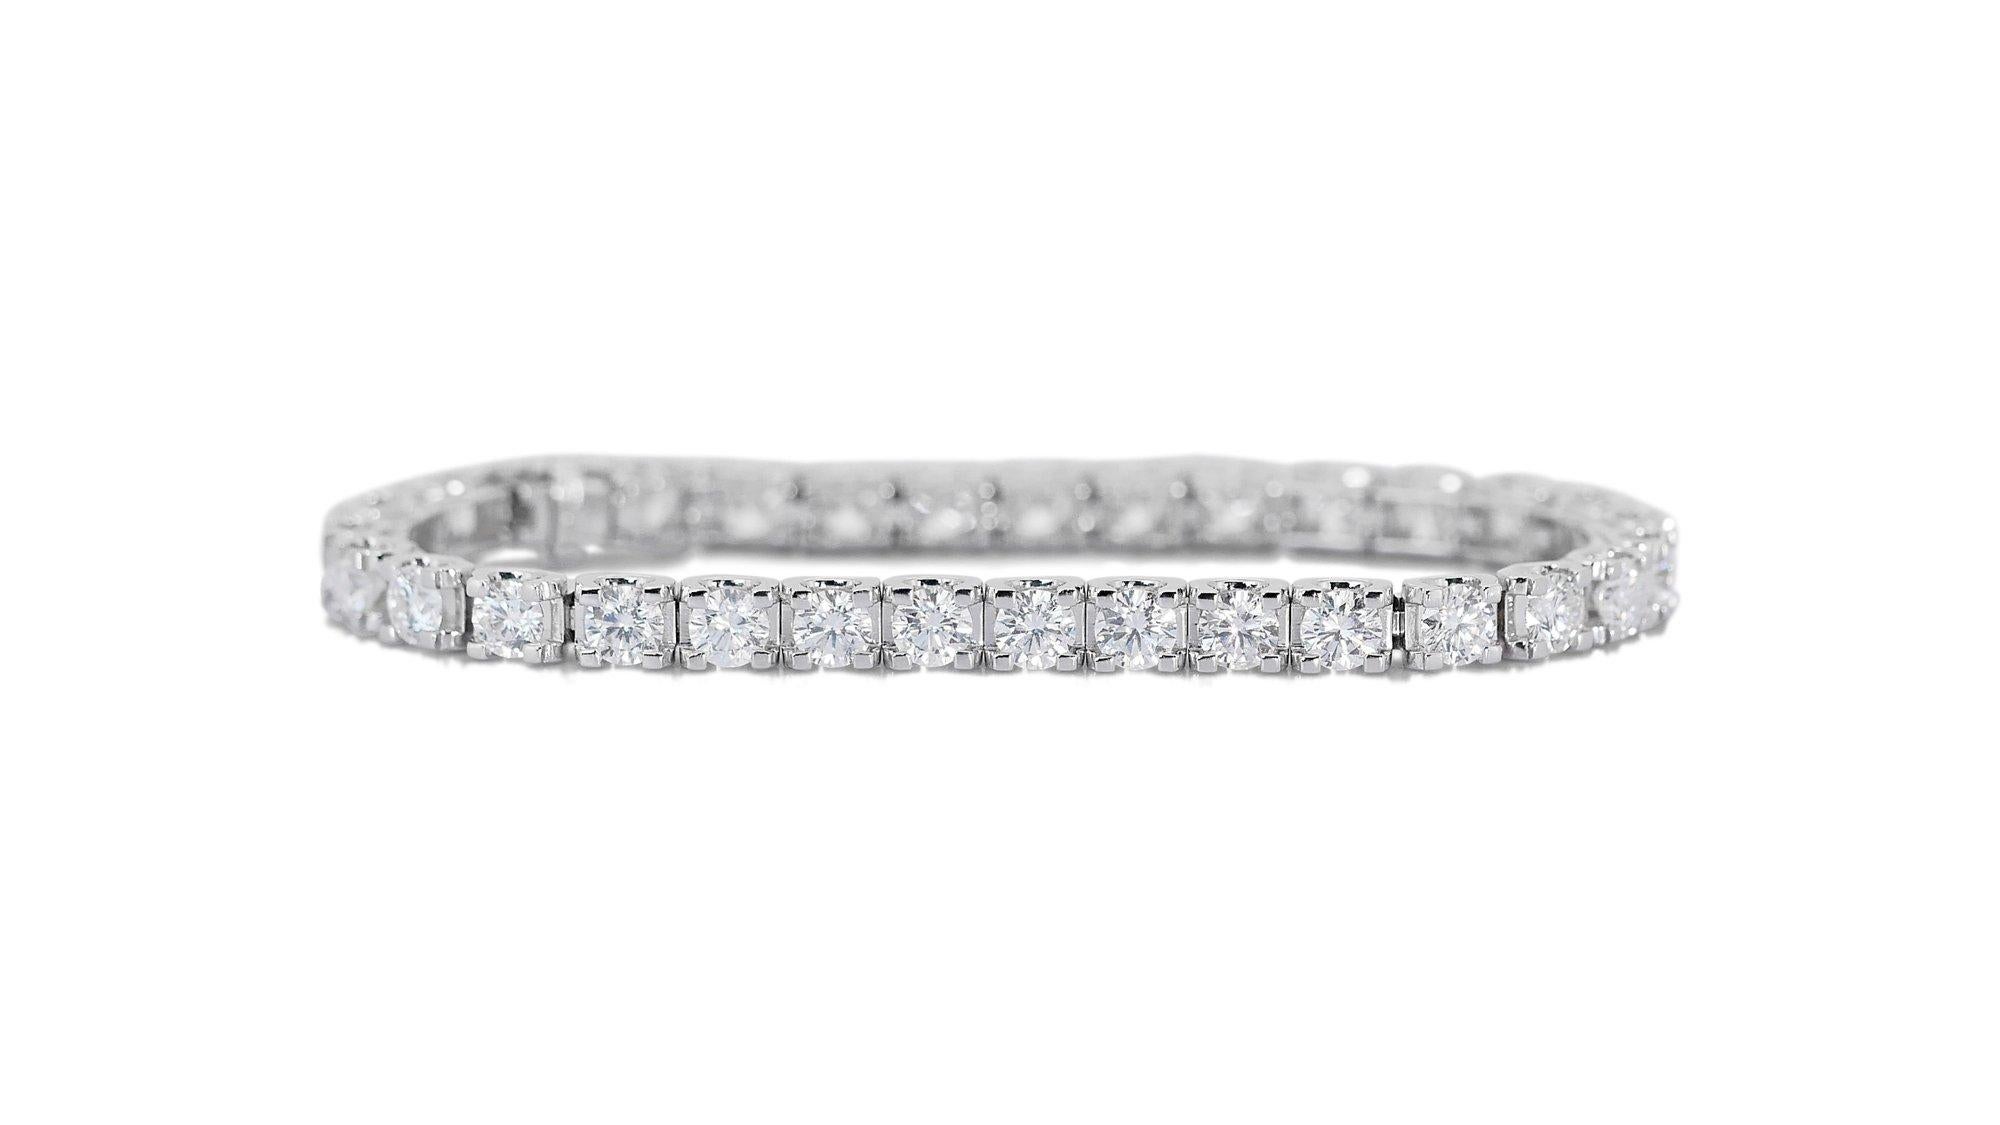 Women's 18 kt. White Gold Diamond Bracelet with 8.5 ct Total Natural Diamonds - IGI Cert